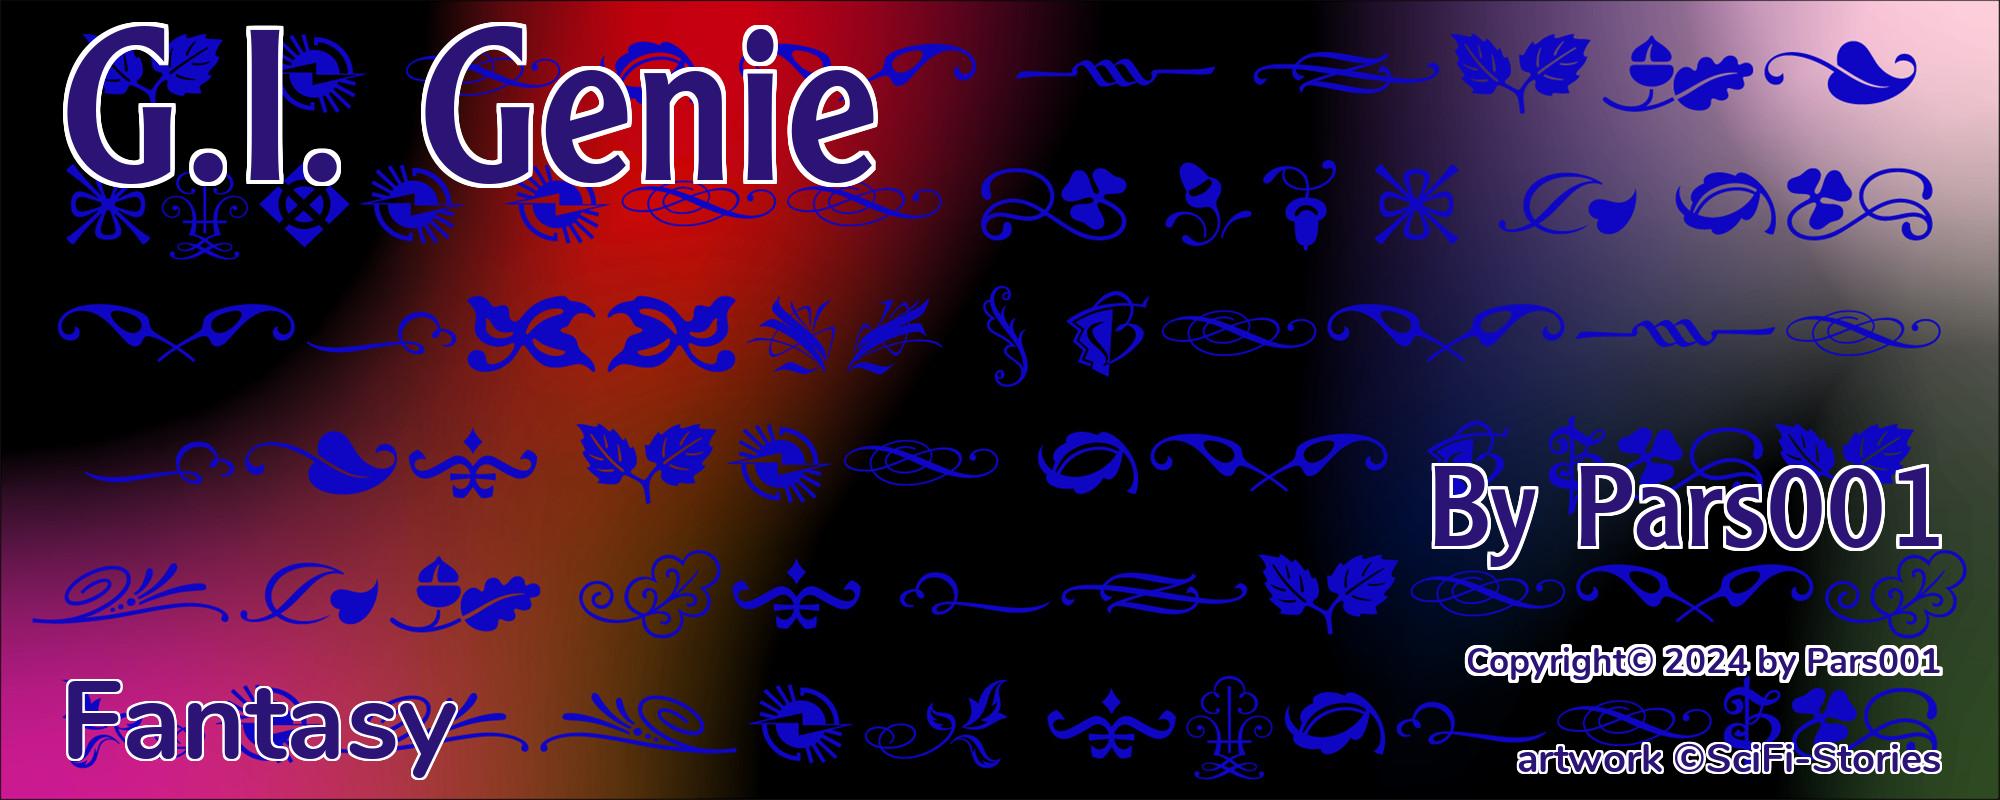 G.I. Genie - Cover